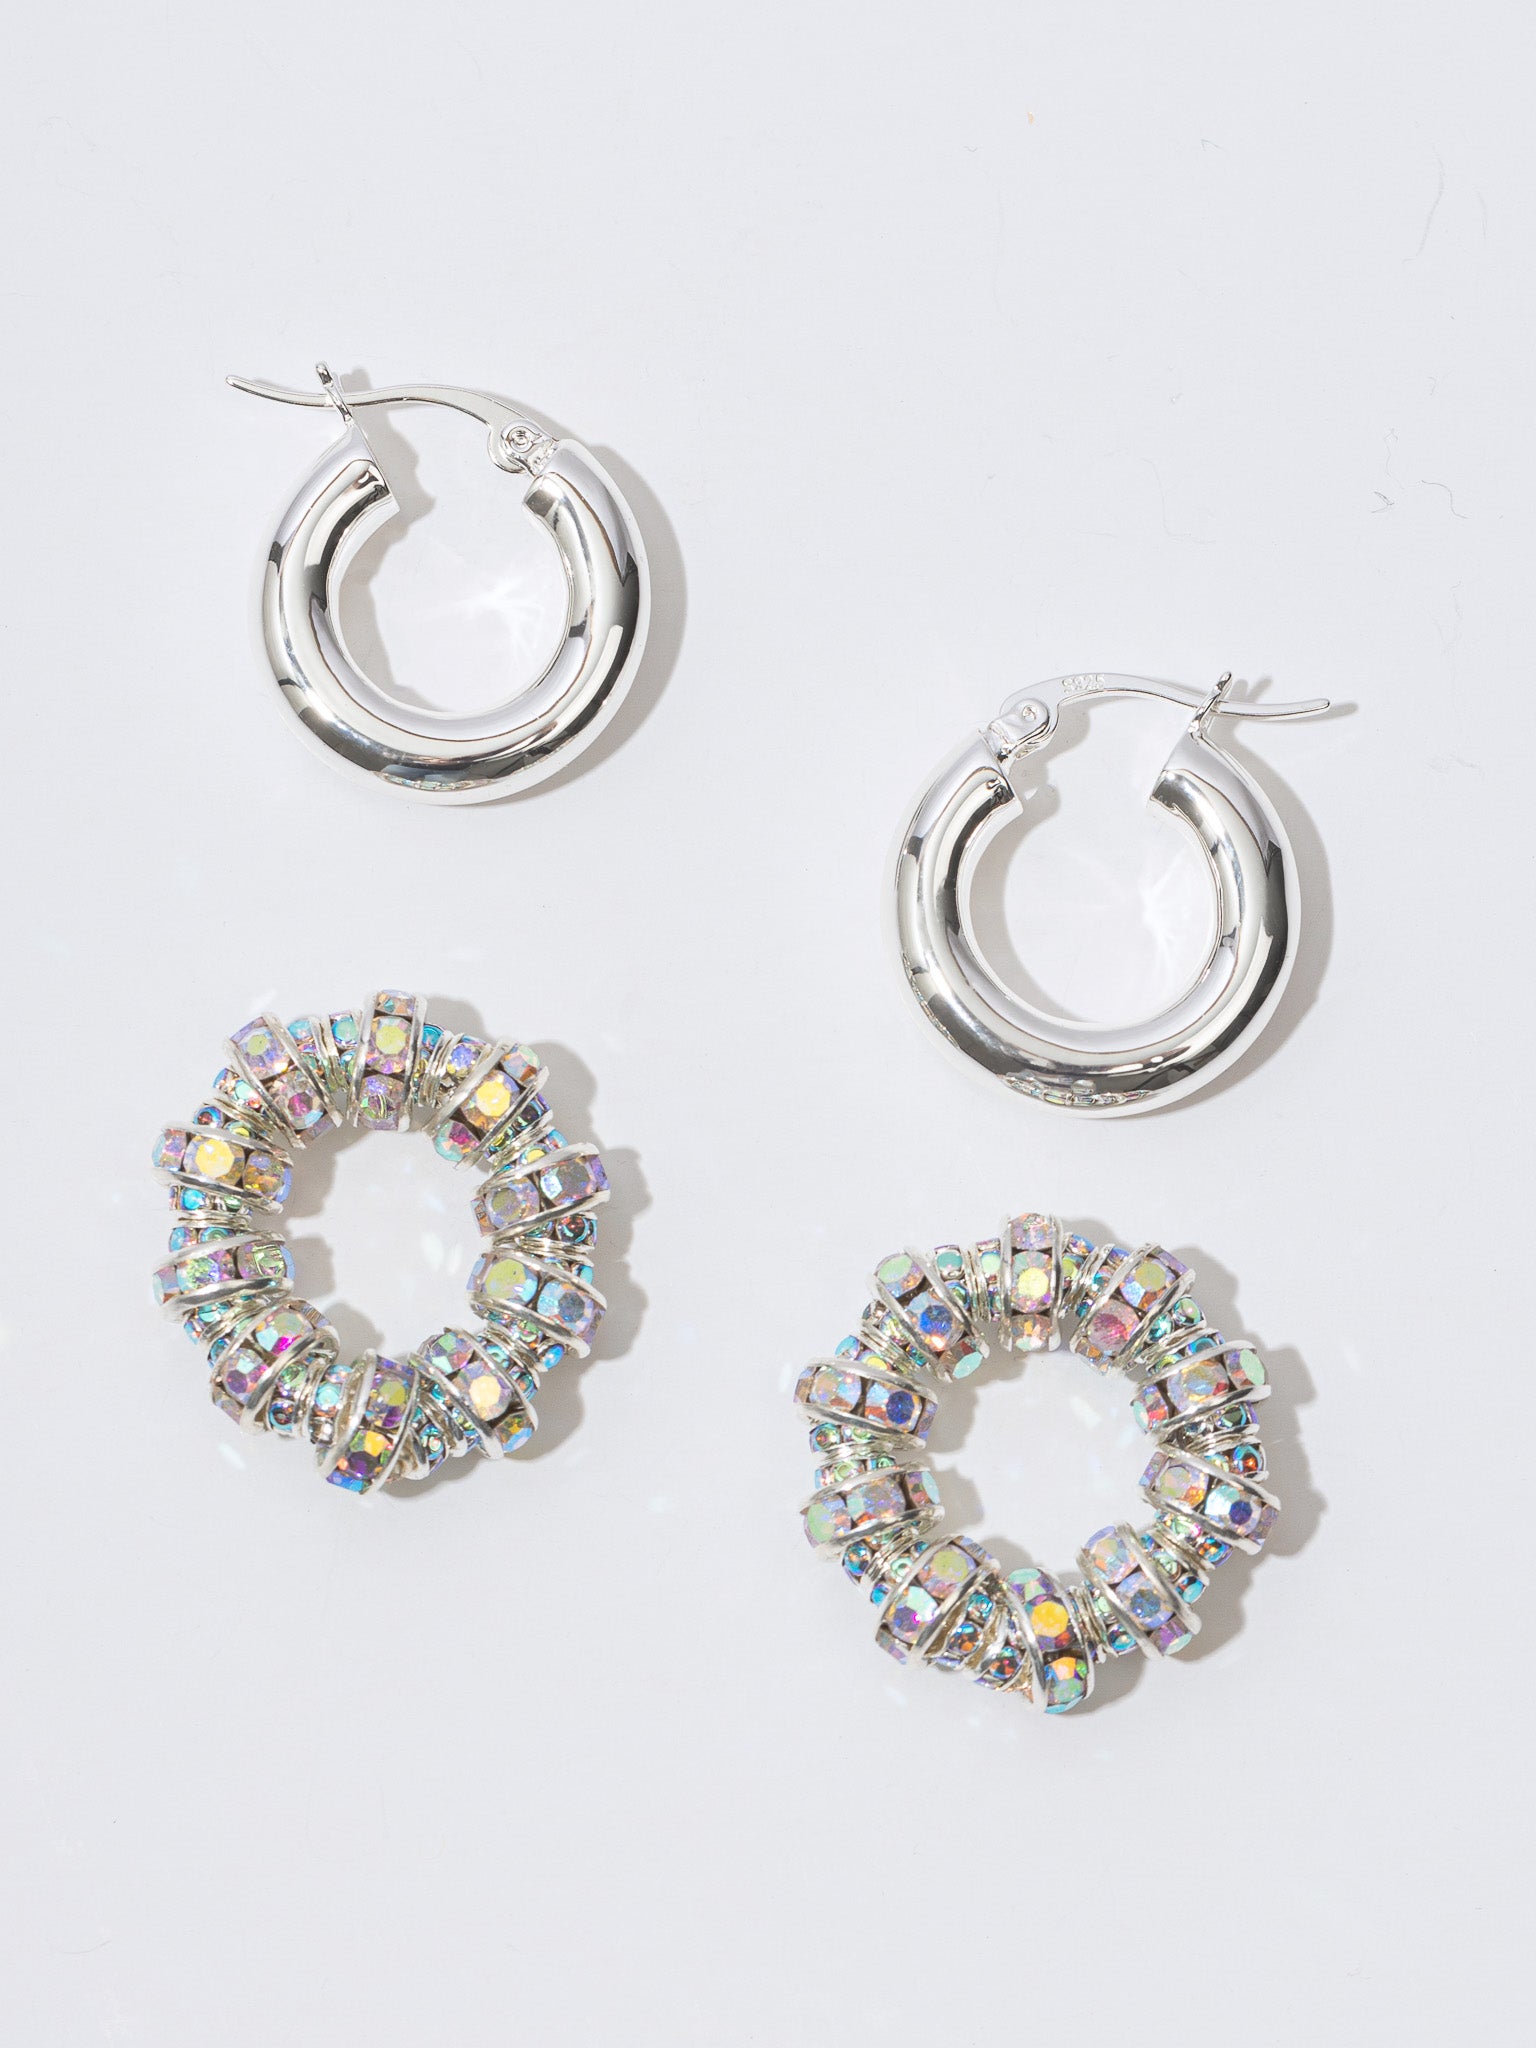 Les Créoles Petites Earrings in Silver